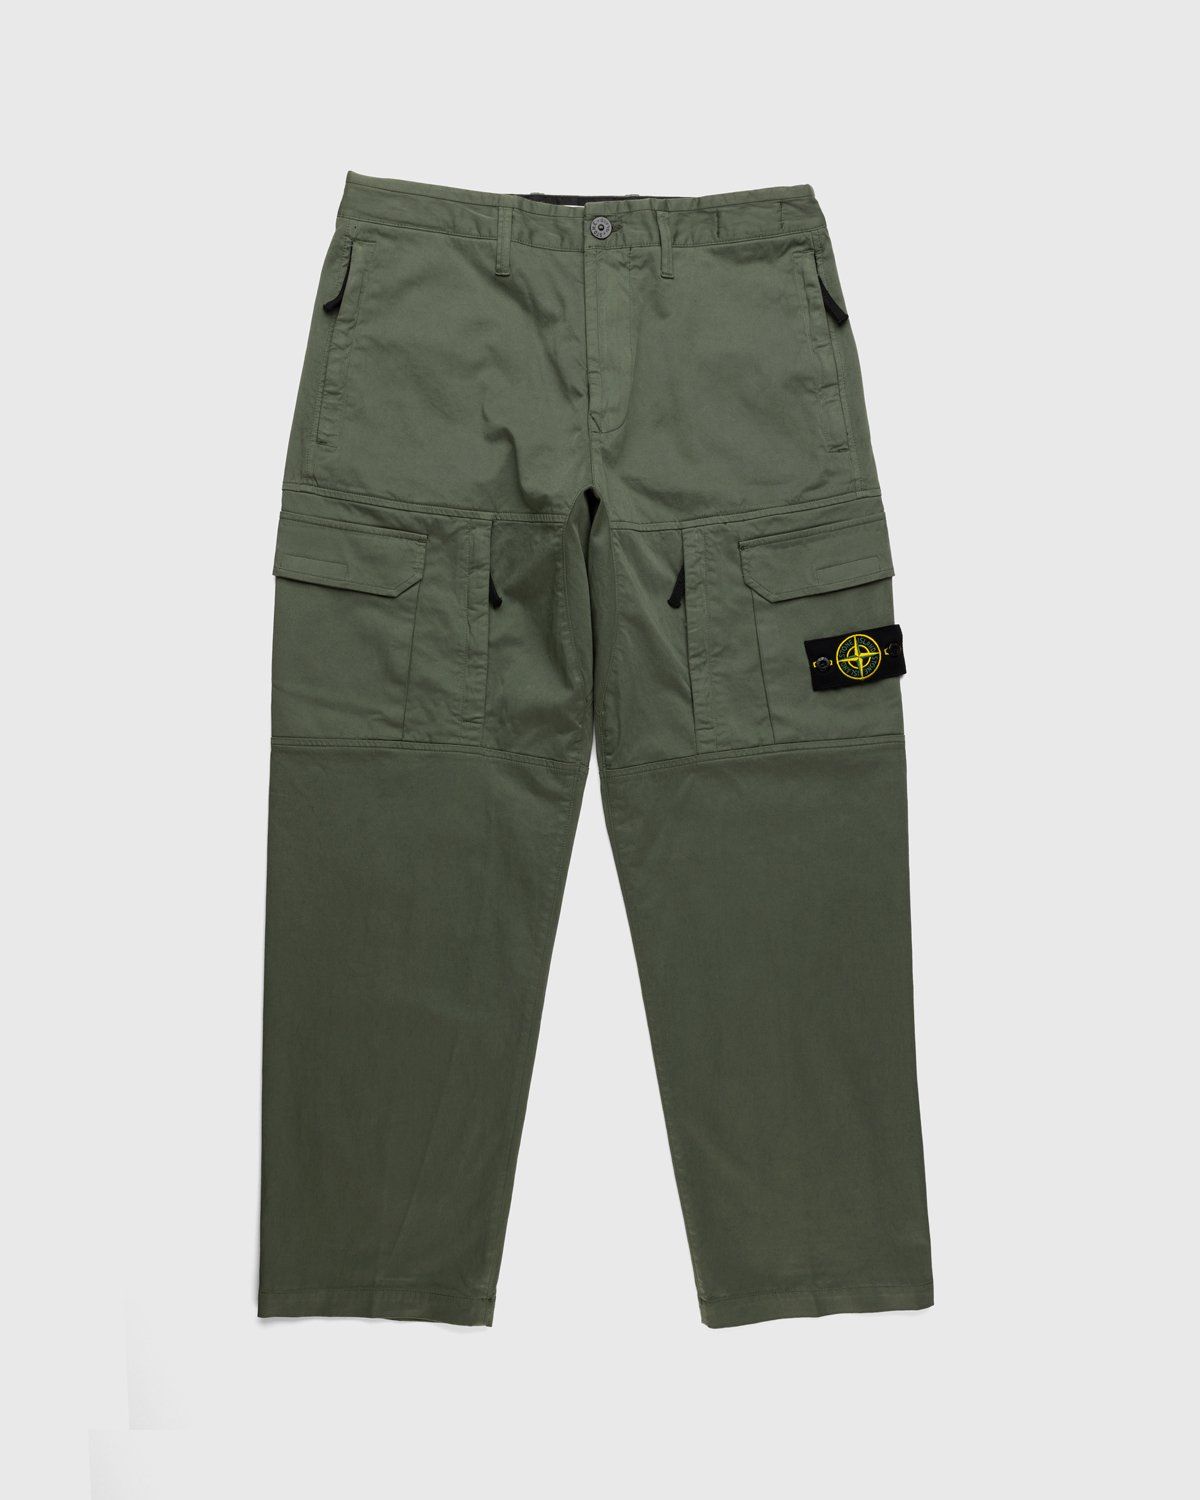 Stone Island – Pants Green - Cargo Pants - Green - Image 1